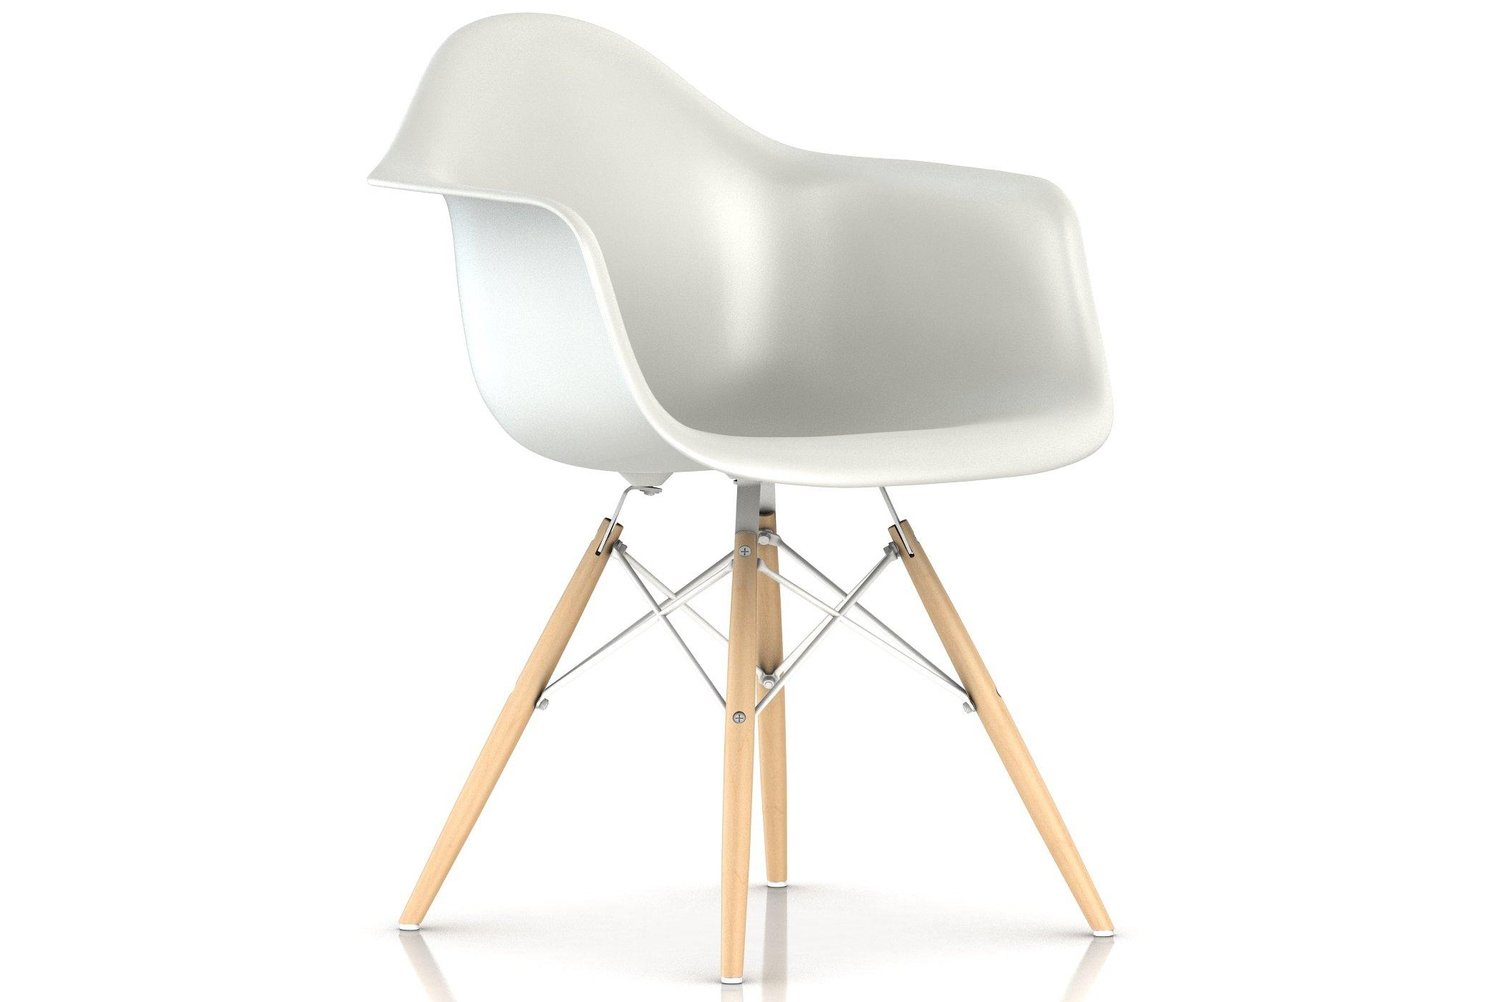 Herman Miller® Eames® Molded Plastic Armchair Dowel Base